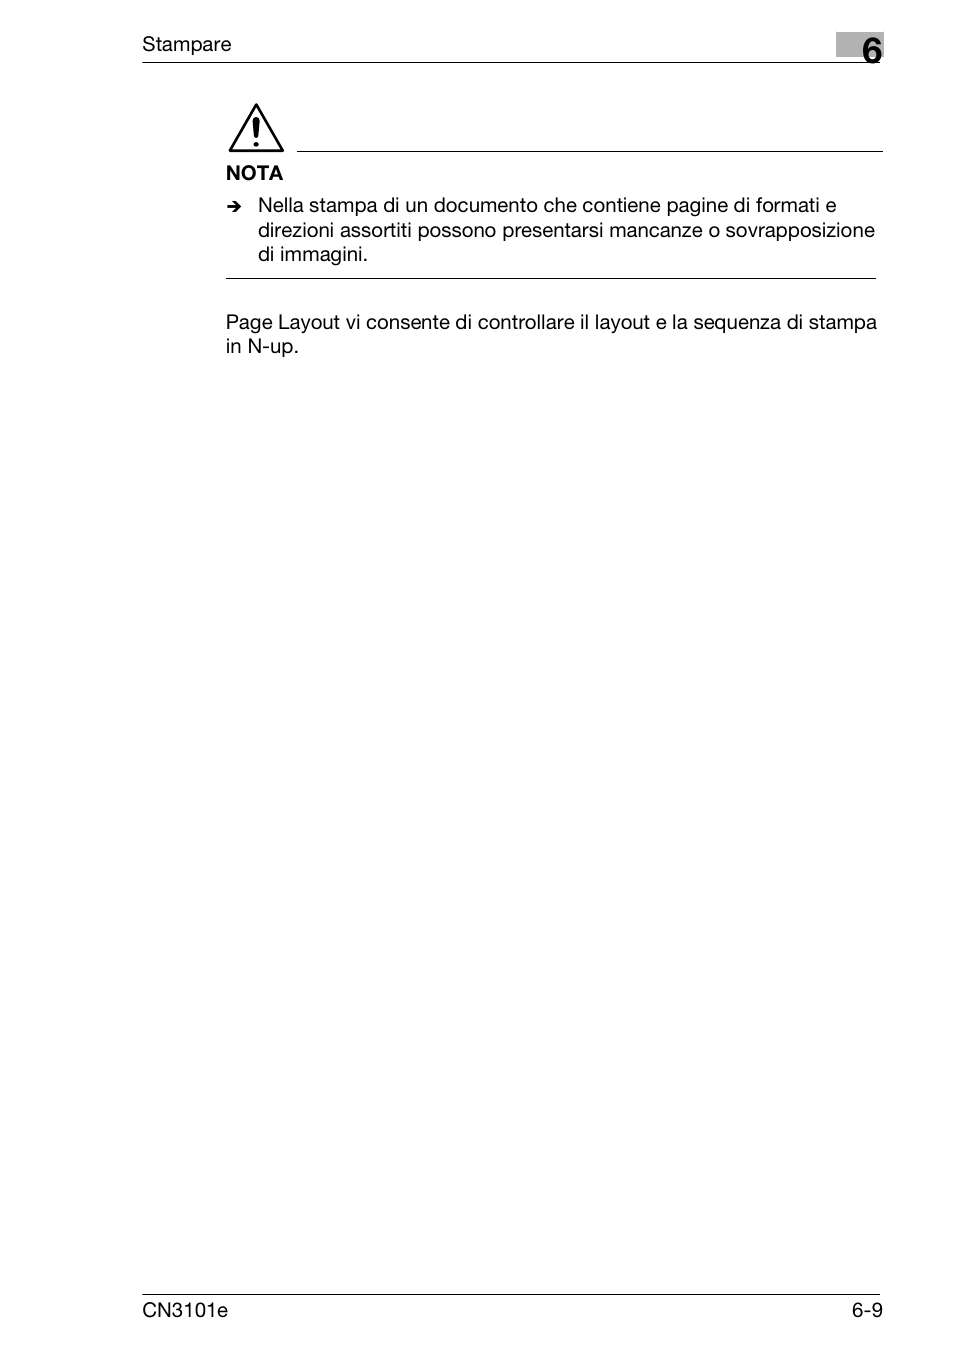 Konica Minolta CN3101e Manuale d'uso | Pagina 61 / 242